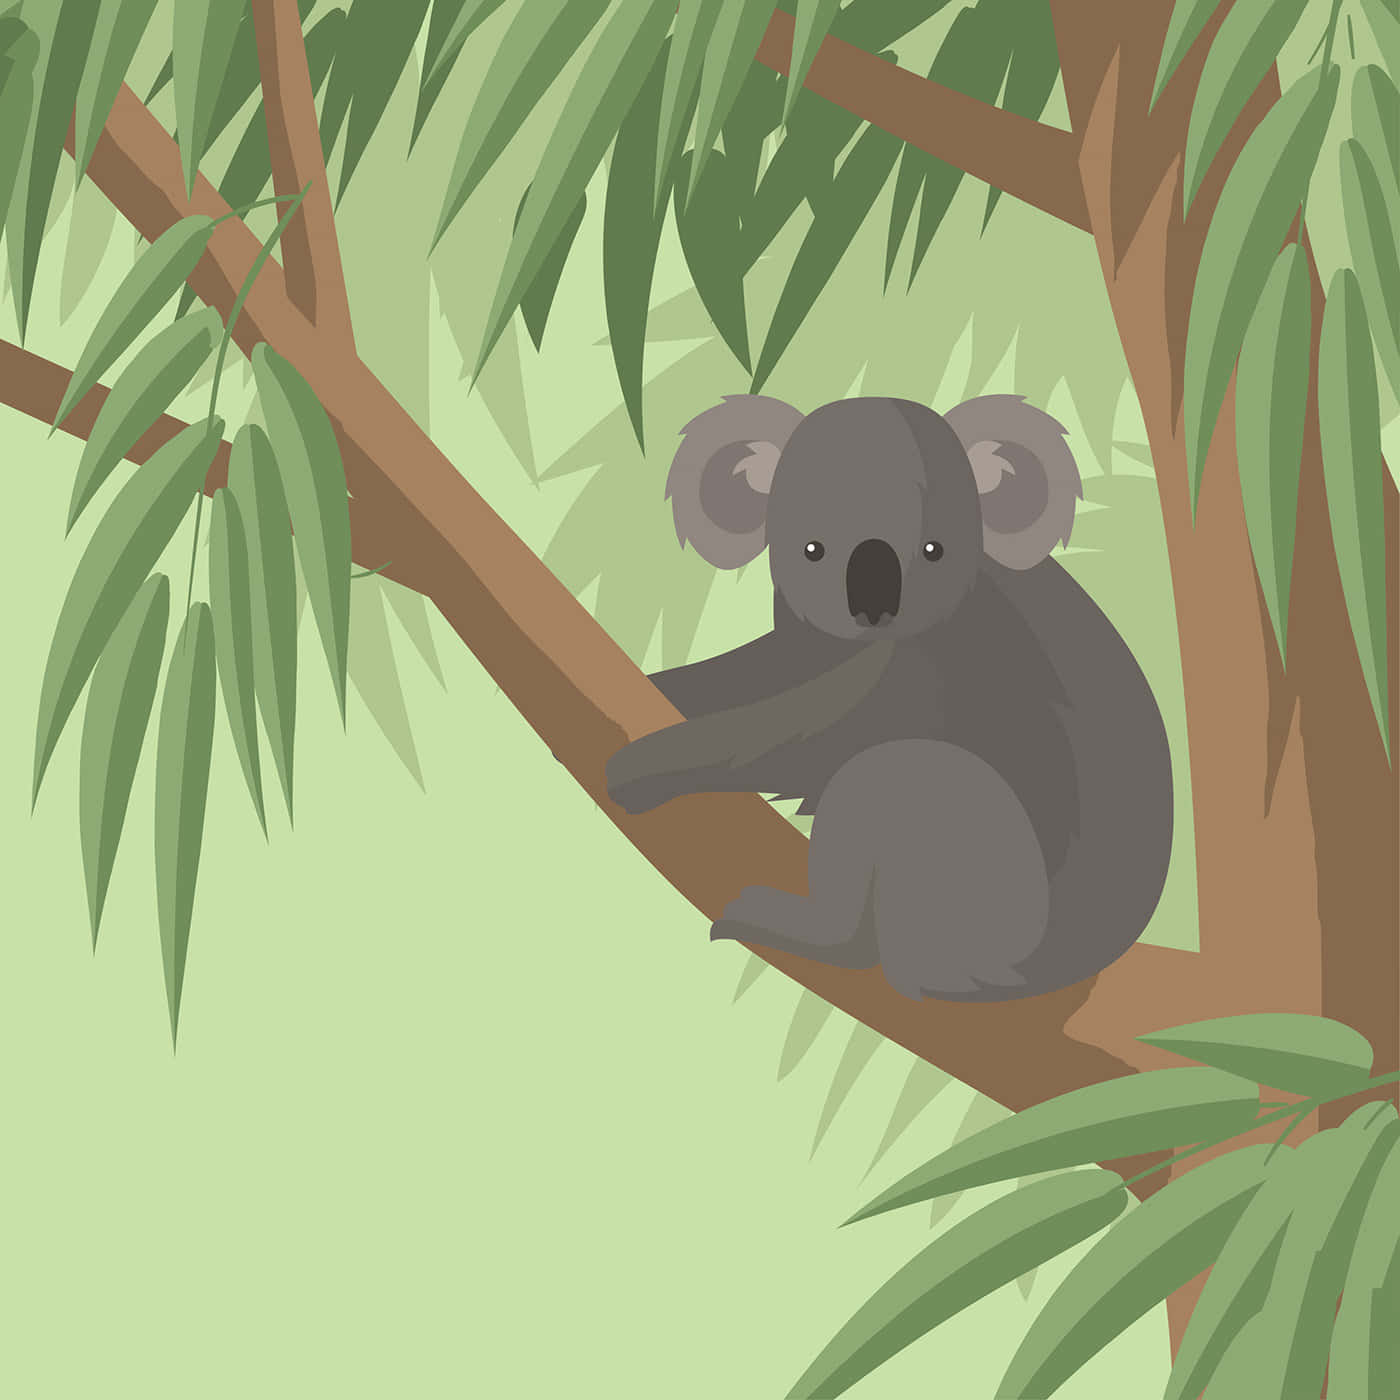 A Cuddly Koala